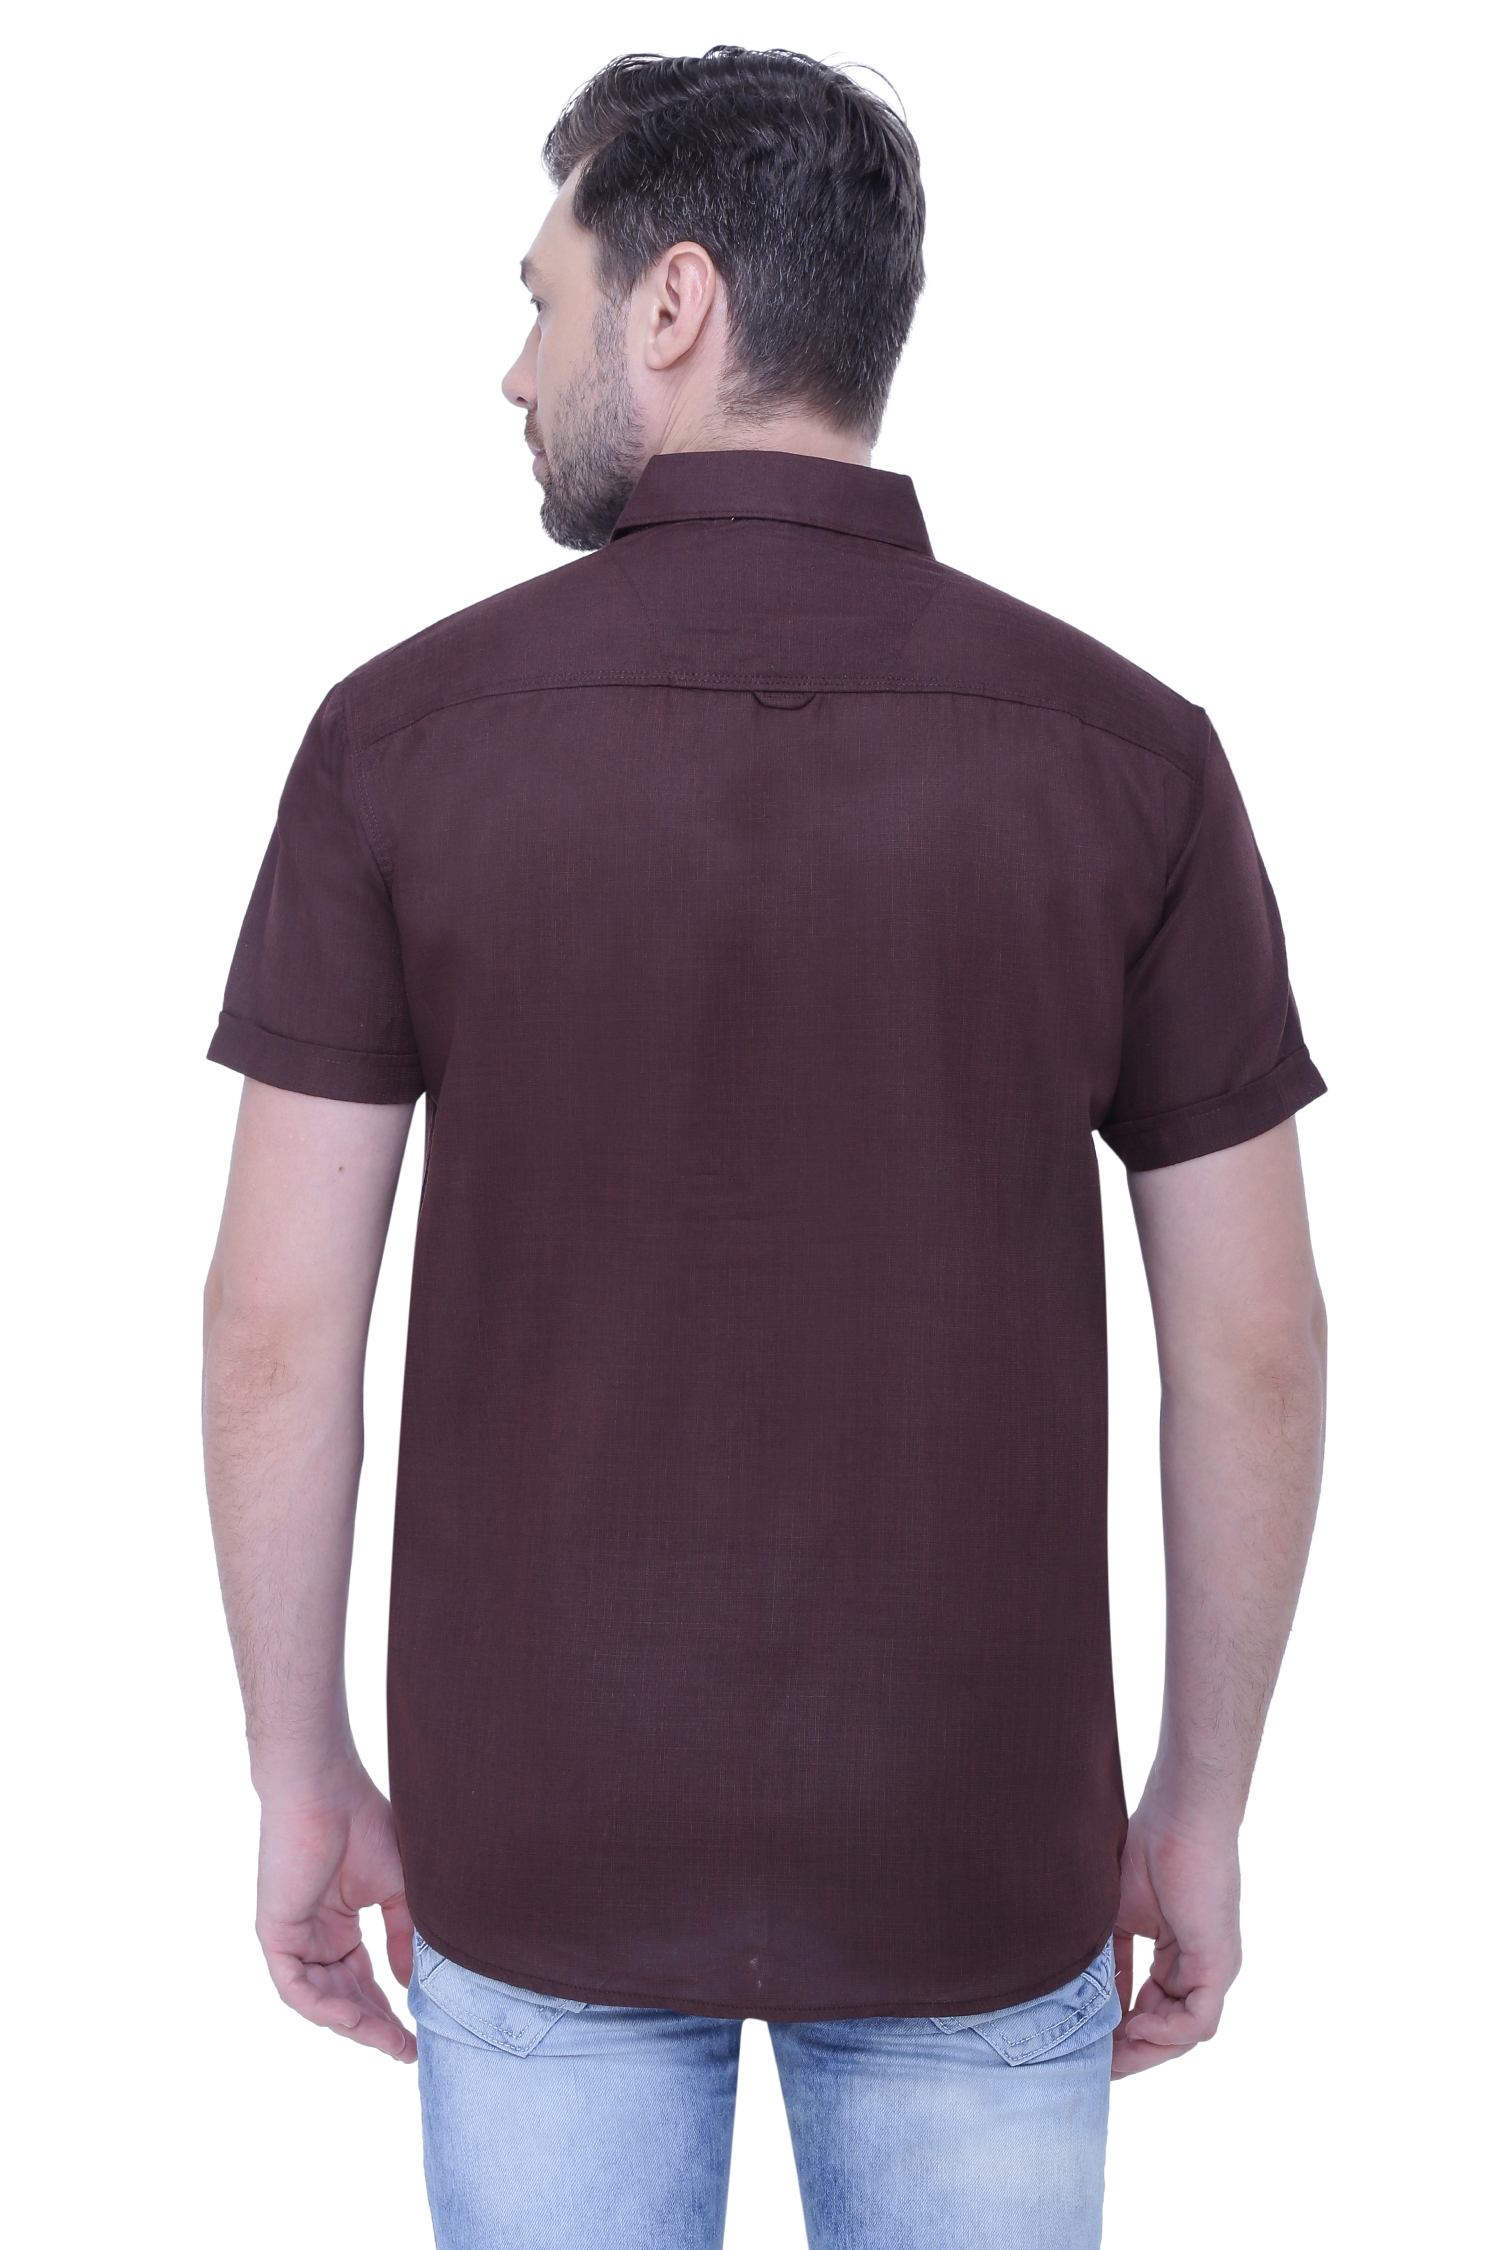 Kuons Avenue | Kuons Avenue Men's Linen Blend Half Sleeves Casual Shirt-KACLHS1240 2